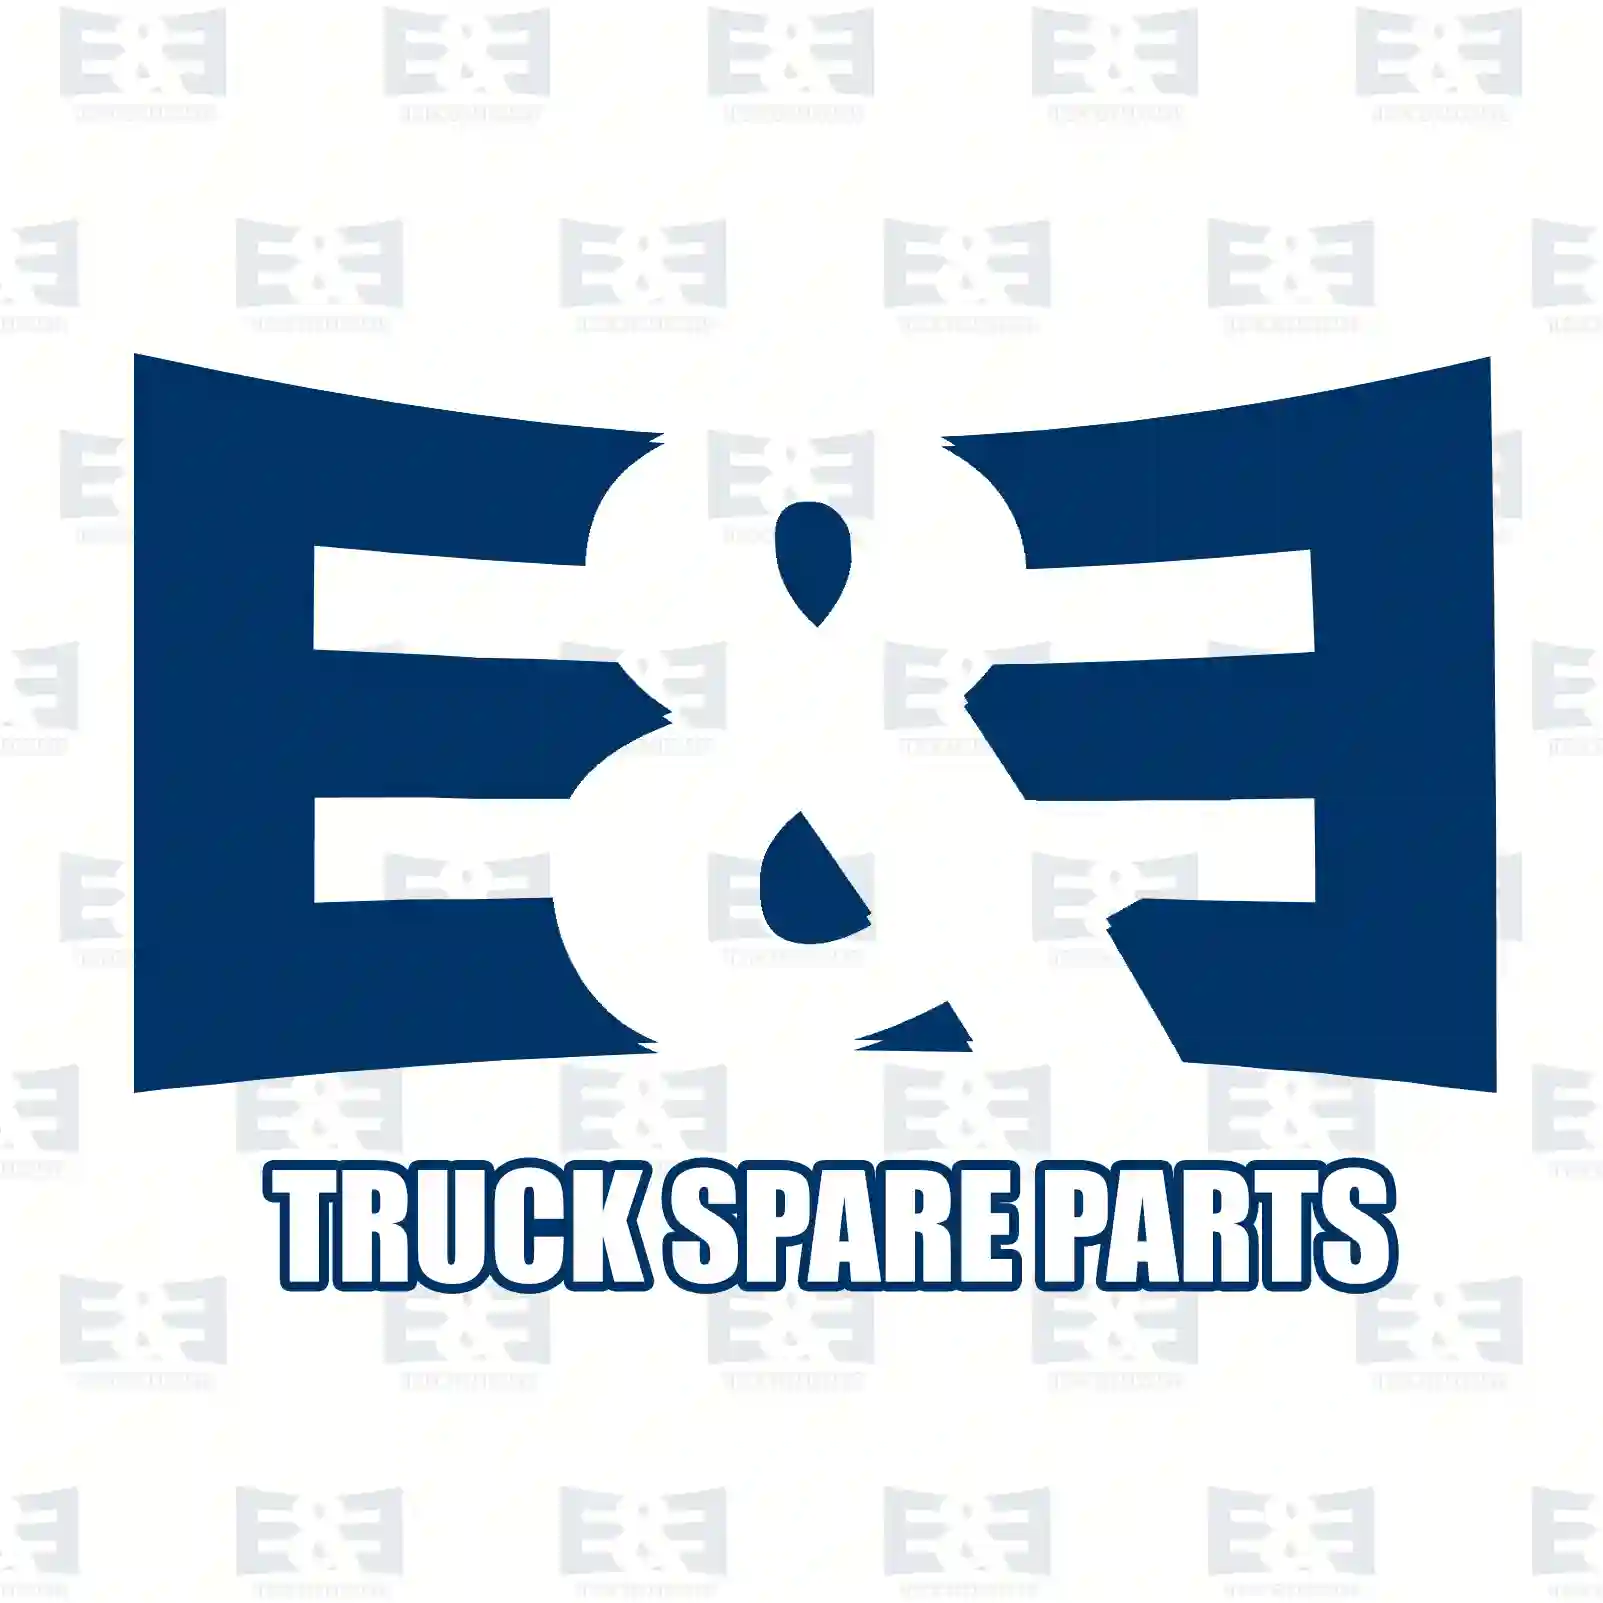  Fender widener, front, right || E&E Truck Spare Parts | Truck Spare Parts, Auotomotive Spare Parts